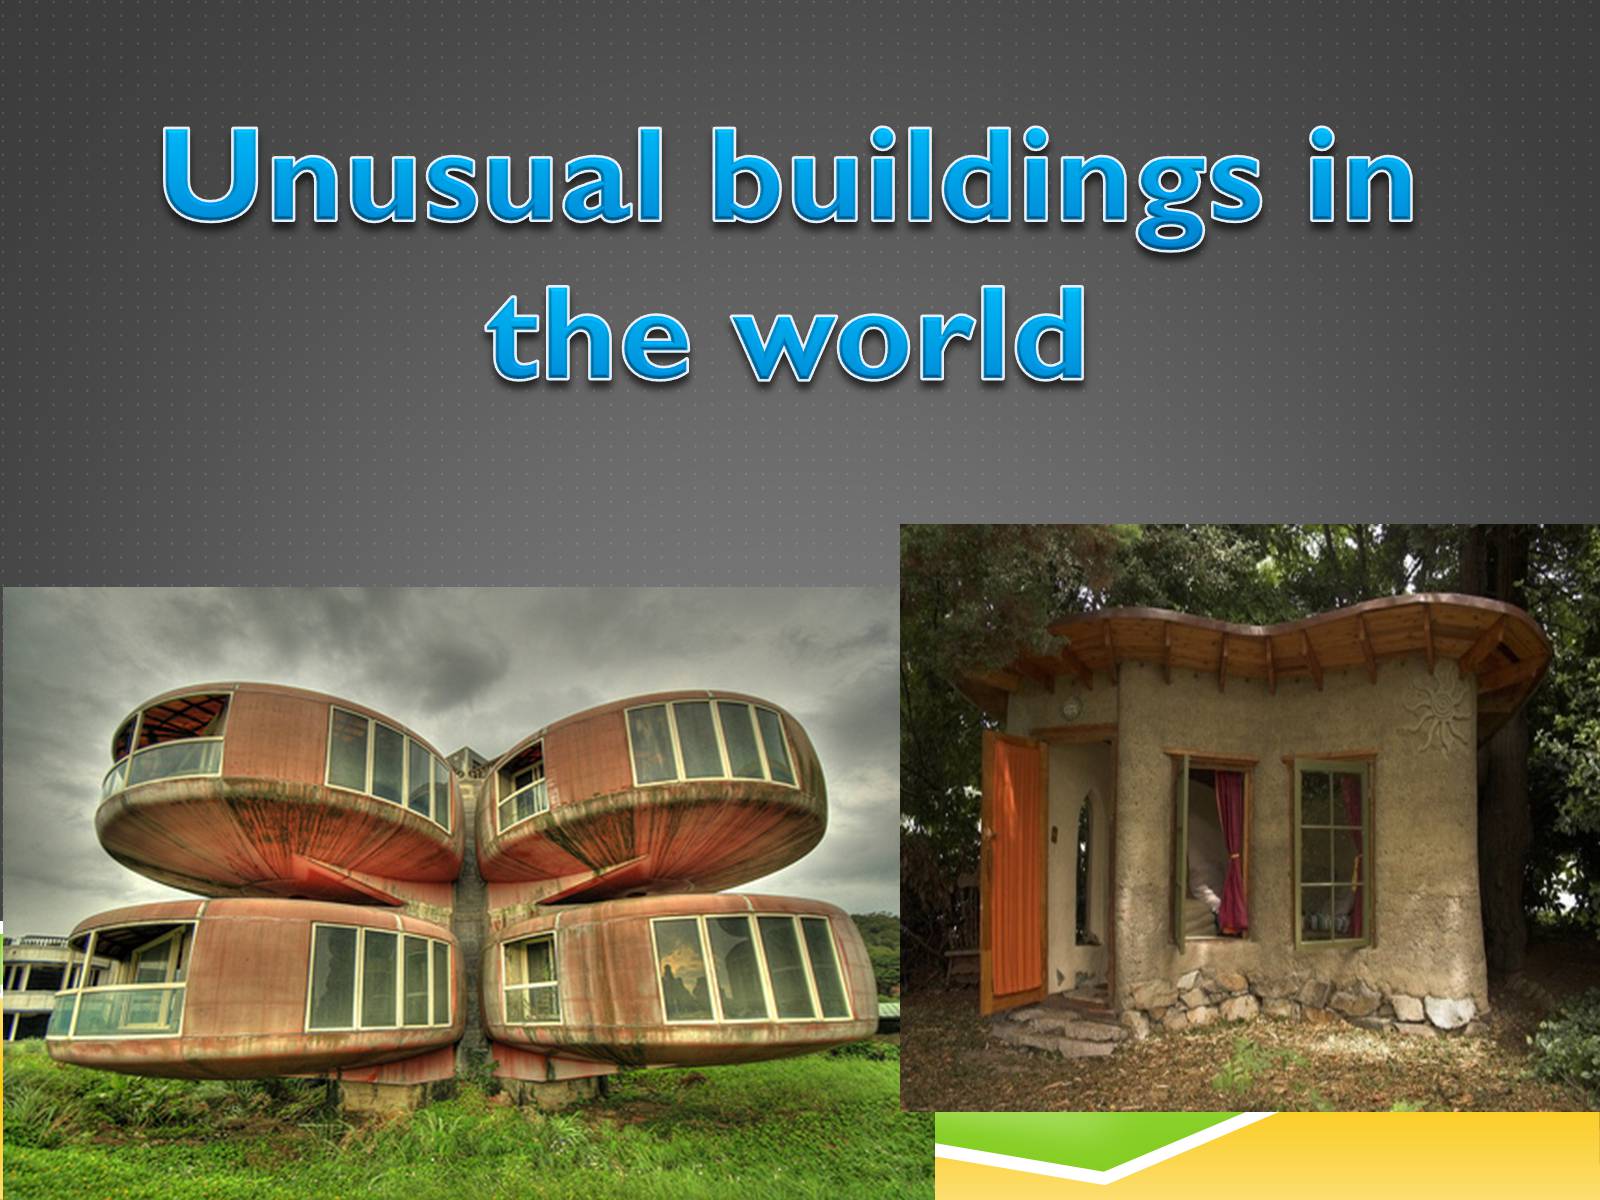 Презентація на тему «Unusual buildings in the world» - Слайд #1